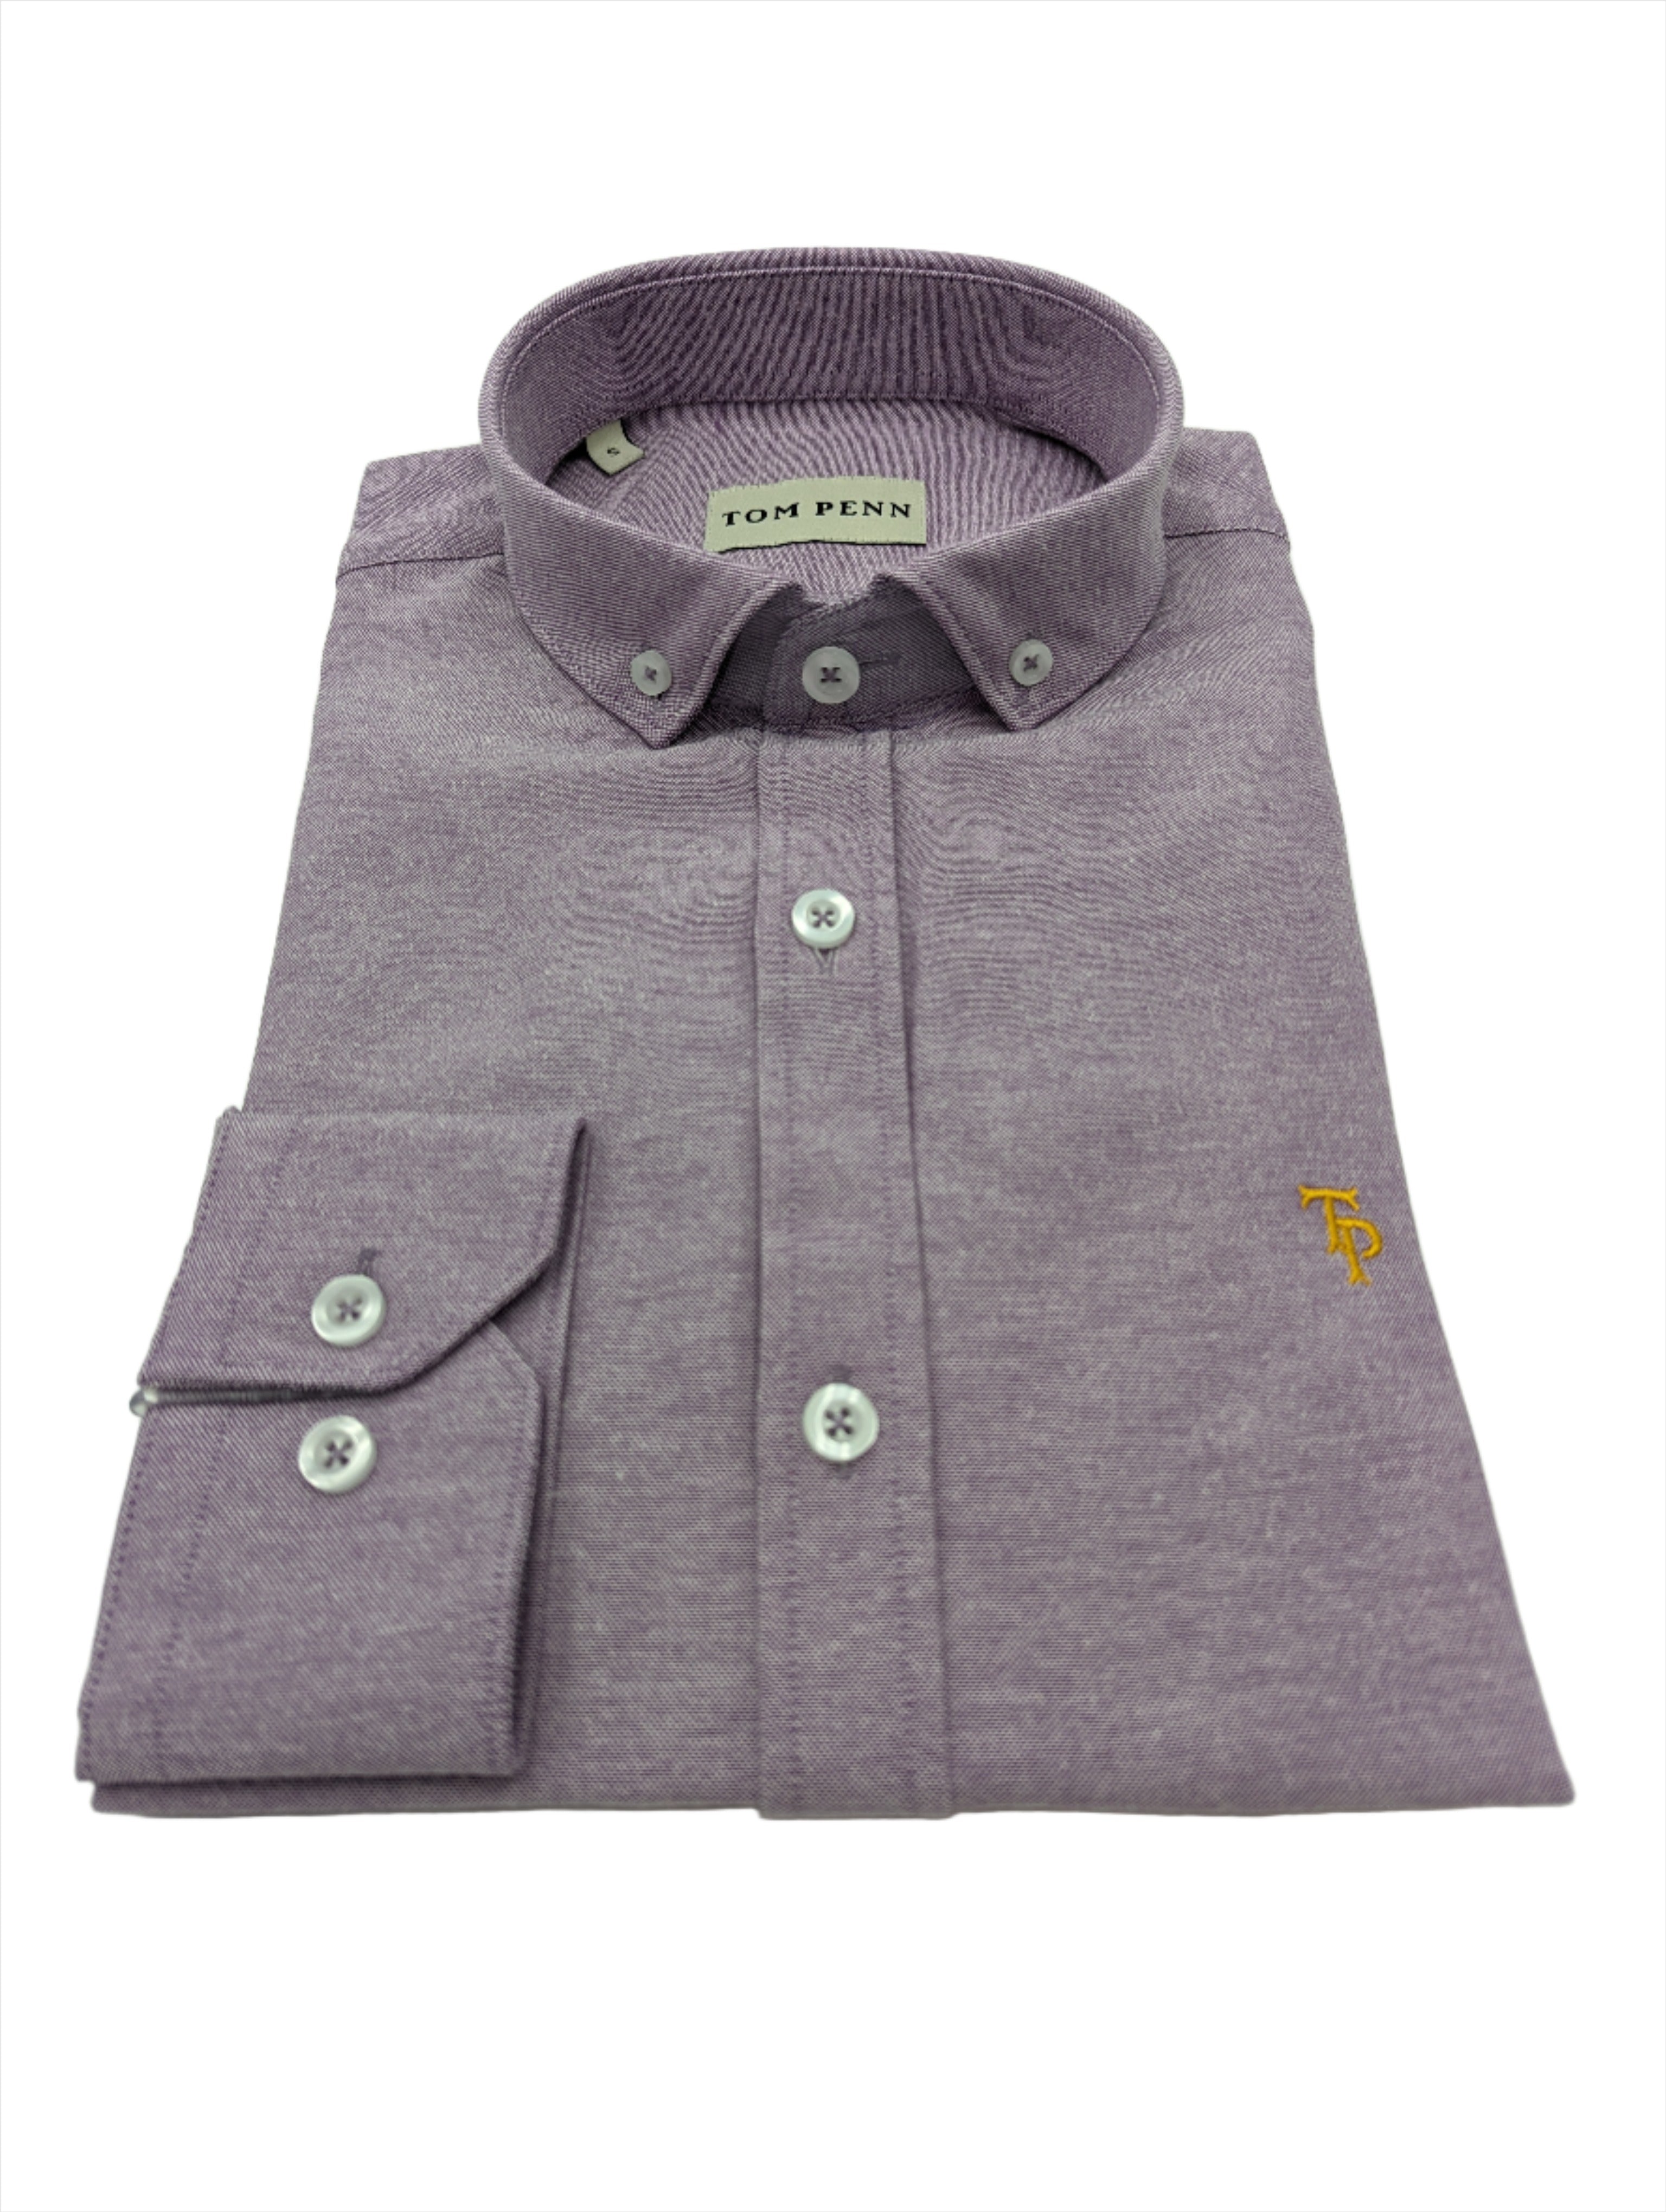 Tom Penn Slim fit Button Down Dark Lilac Shirt-Collar view